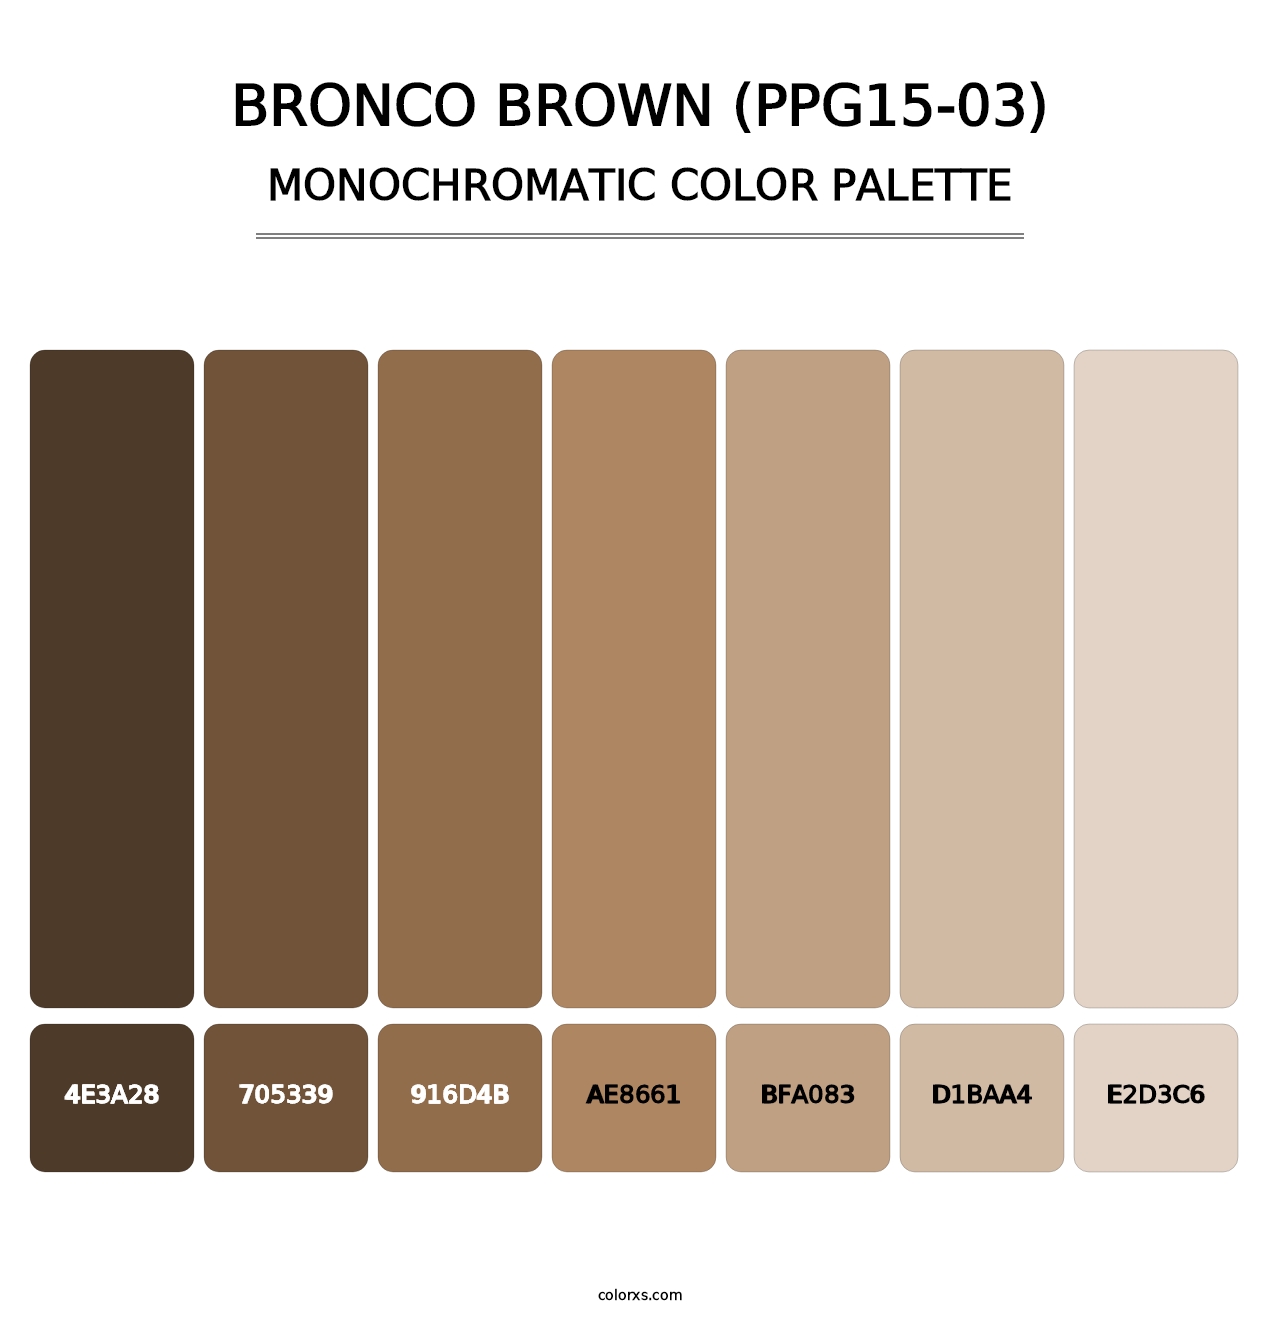 Bronco Brown (PPG15-03) - Monochromatic Color Palette